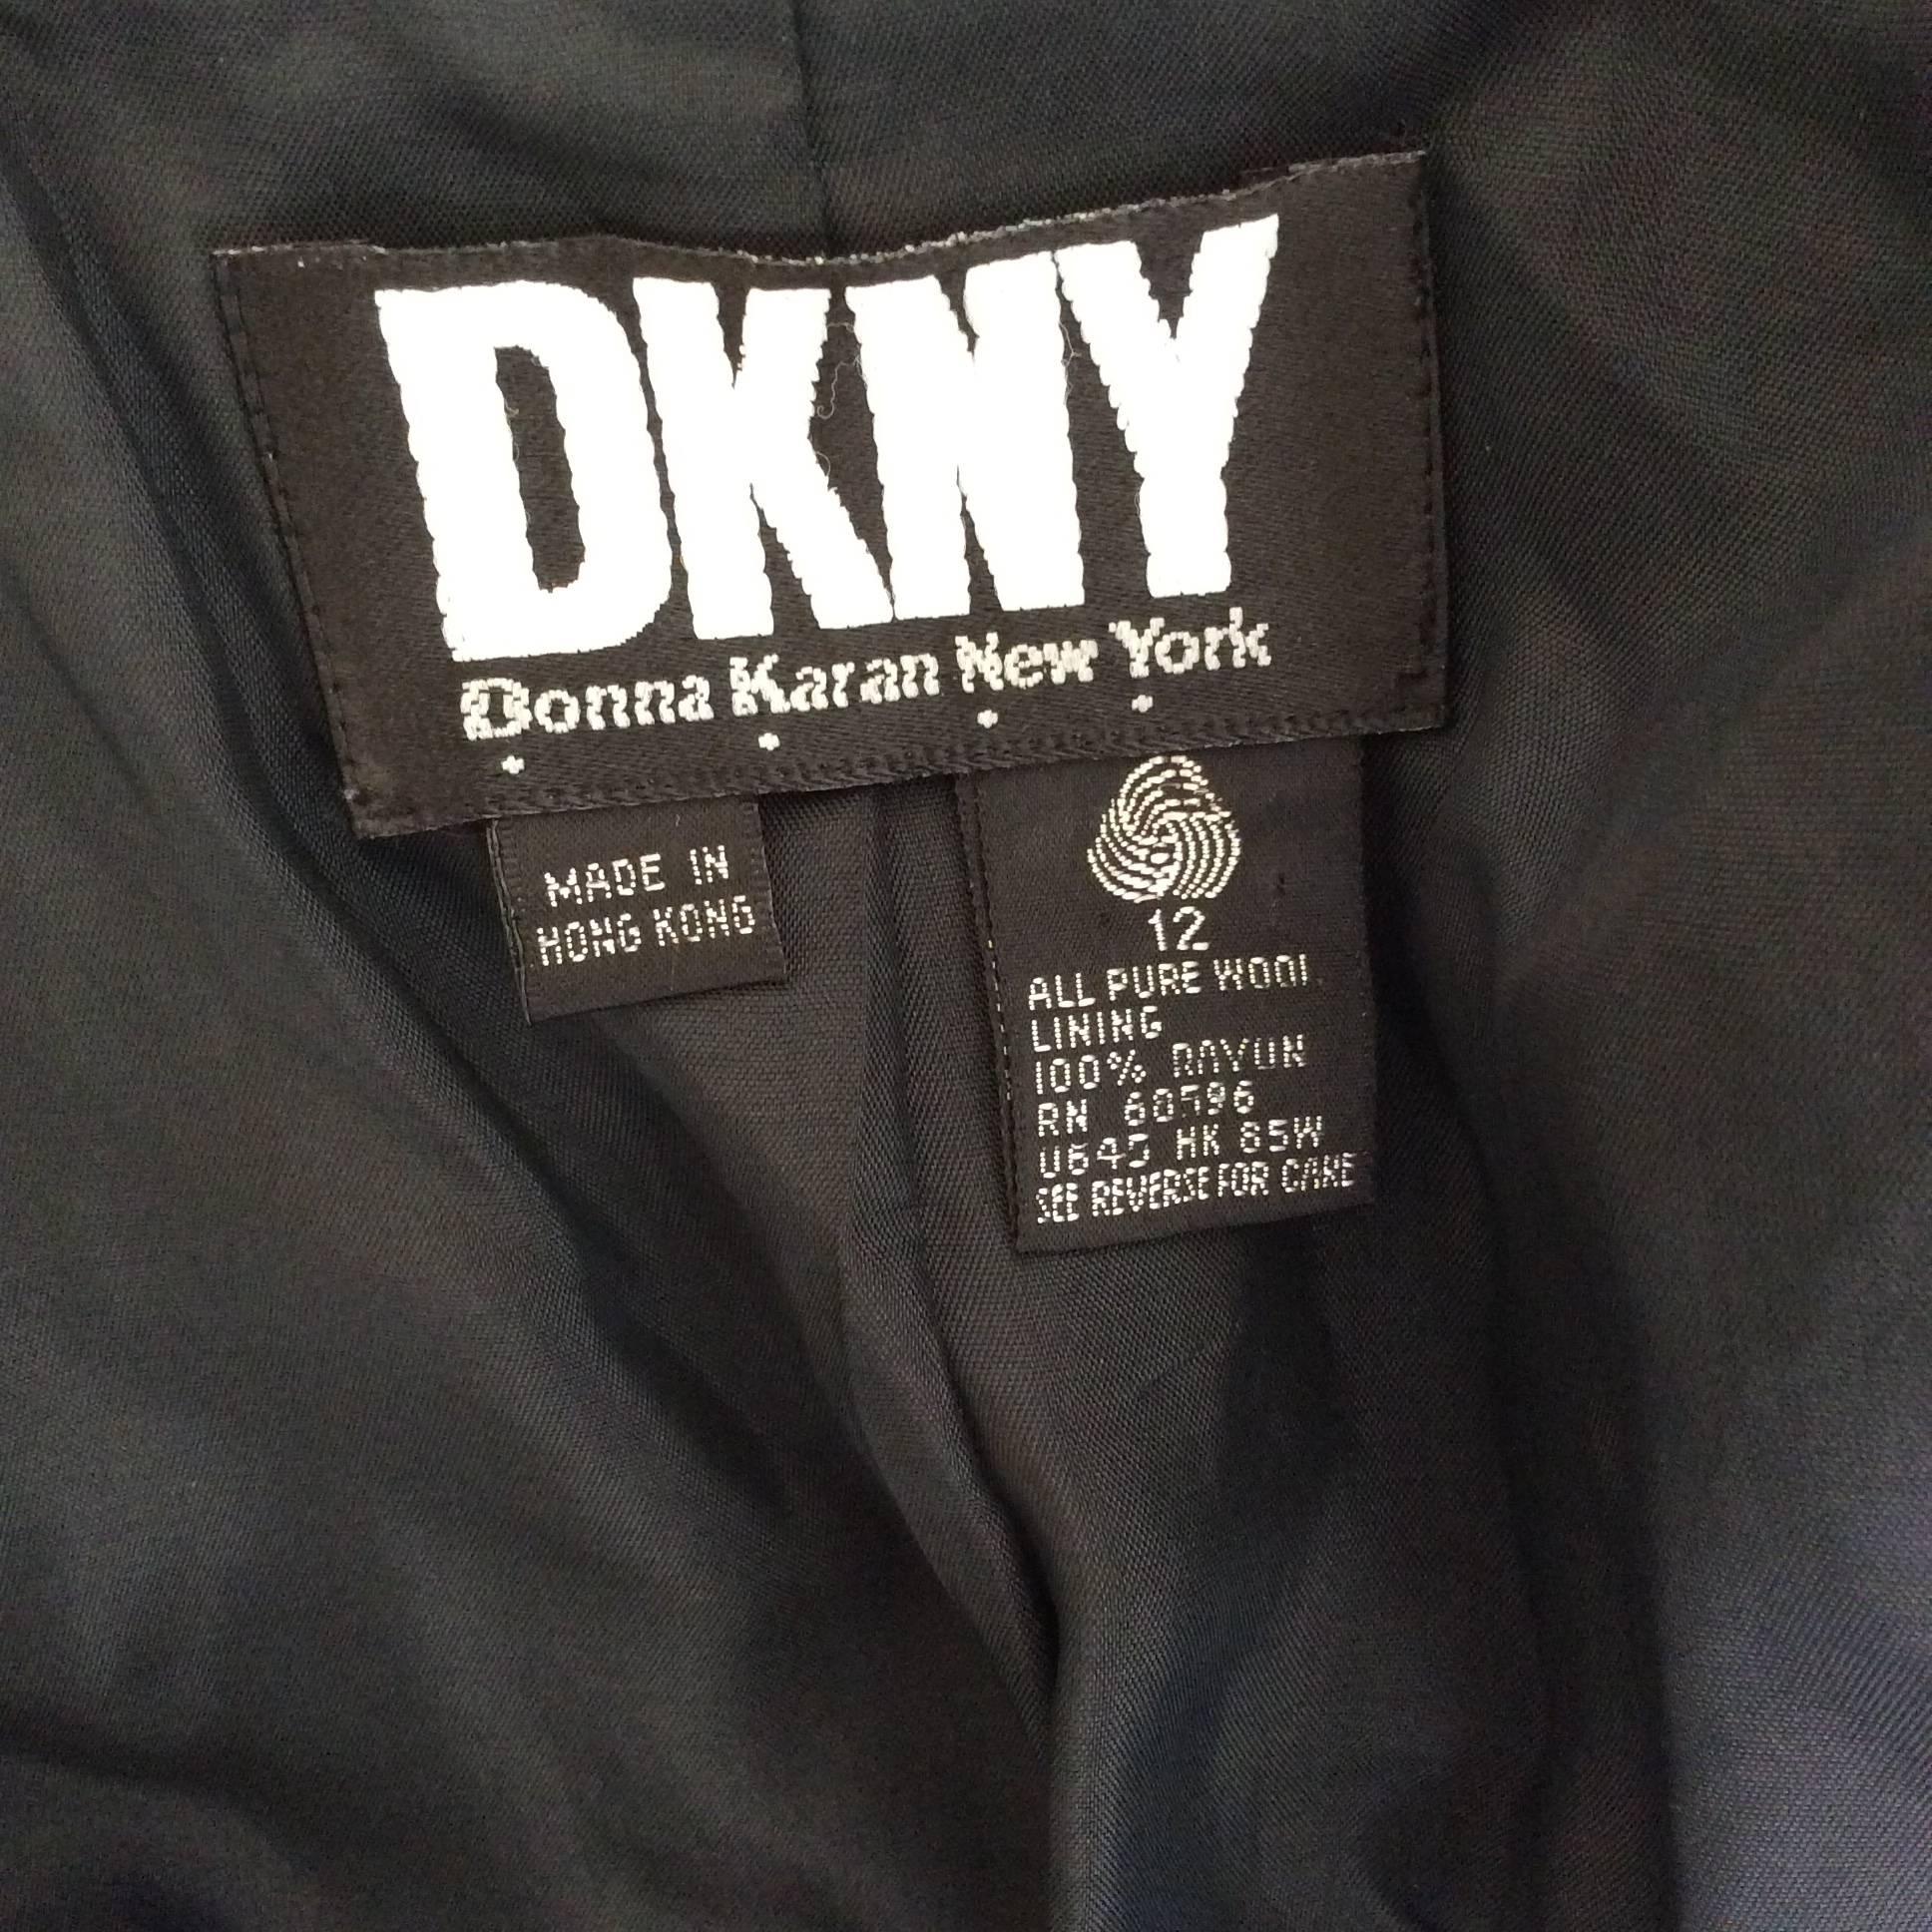 DKNY Donna Karen New York Black Military Style Jacket For Sale 1